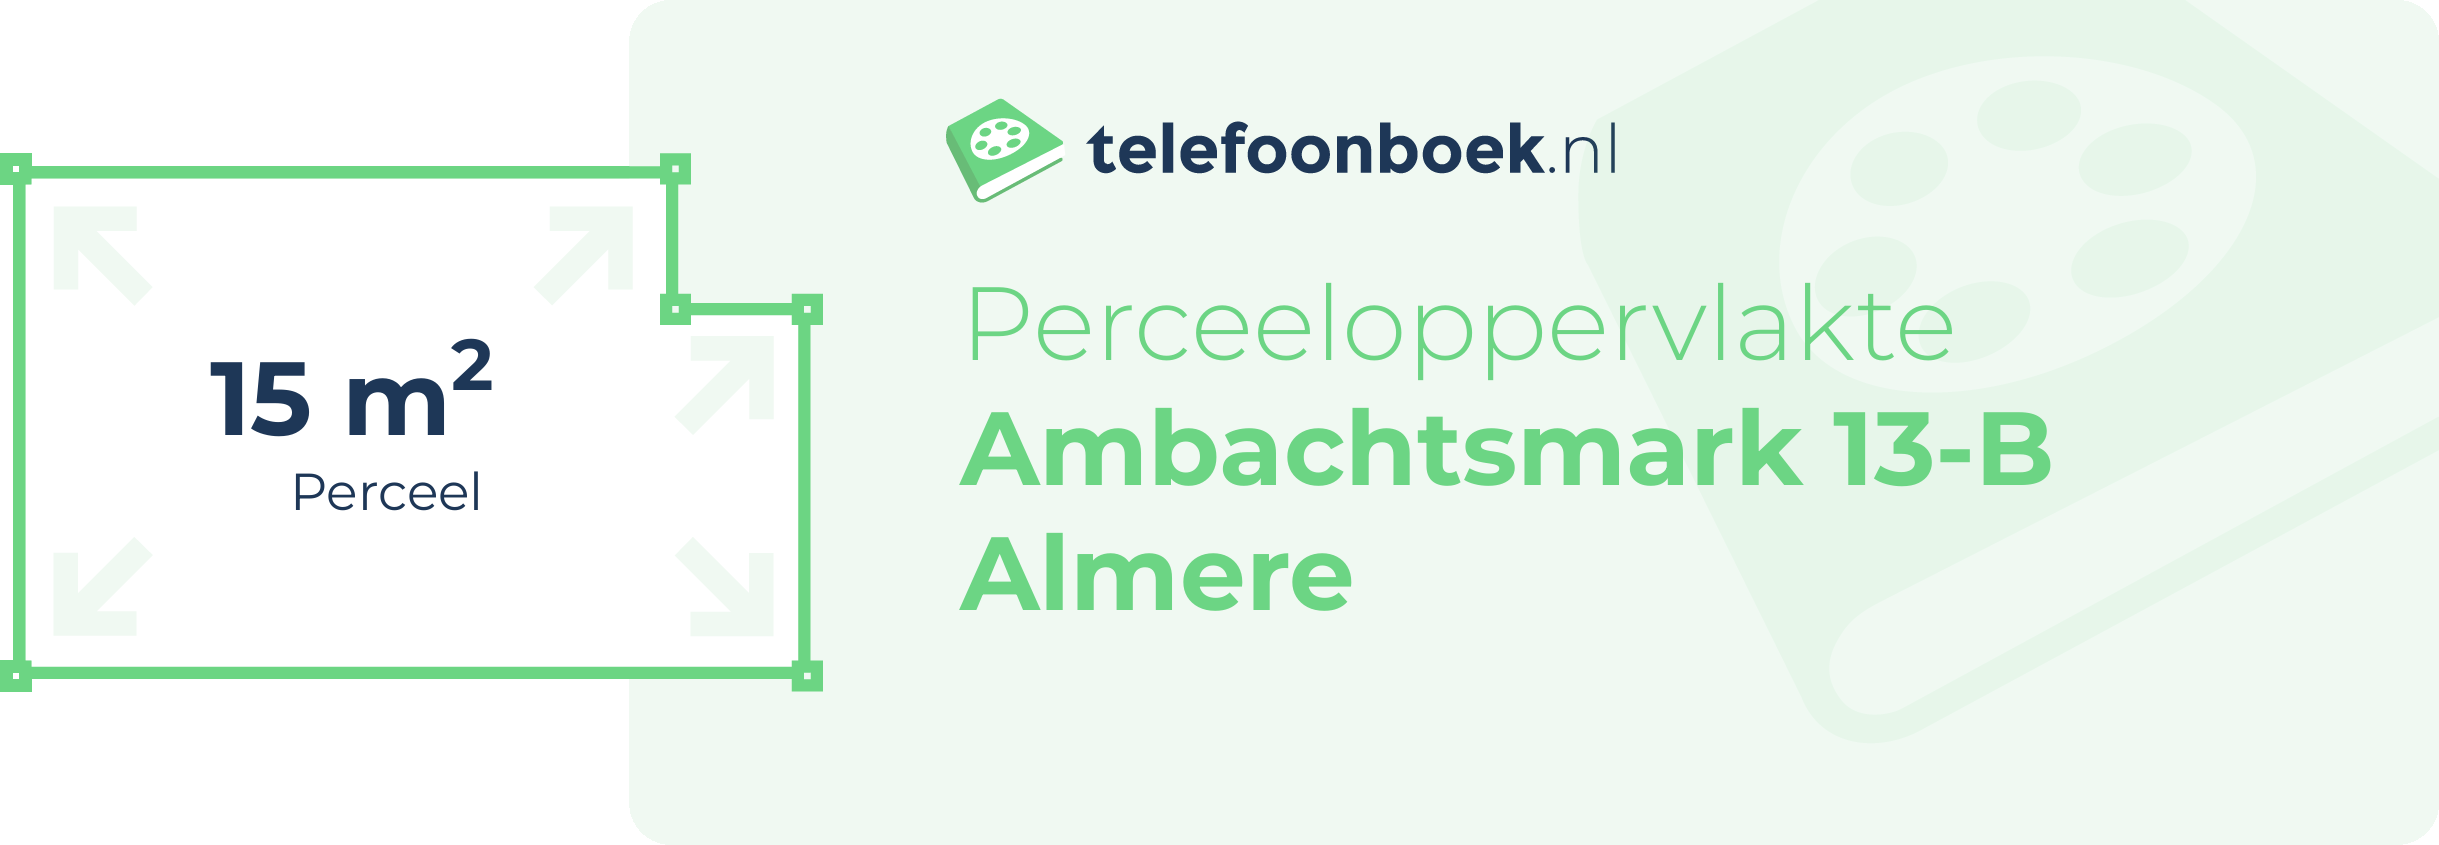 Perceeloppervlakte Ambachtsmark 13-B Almere